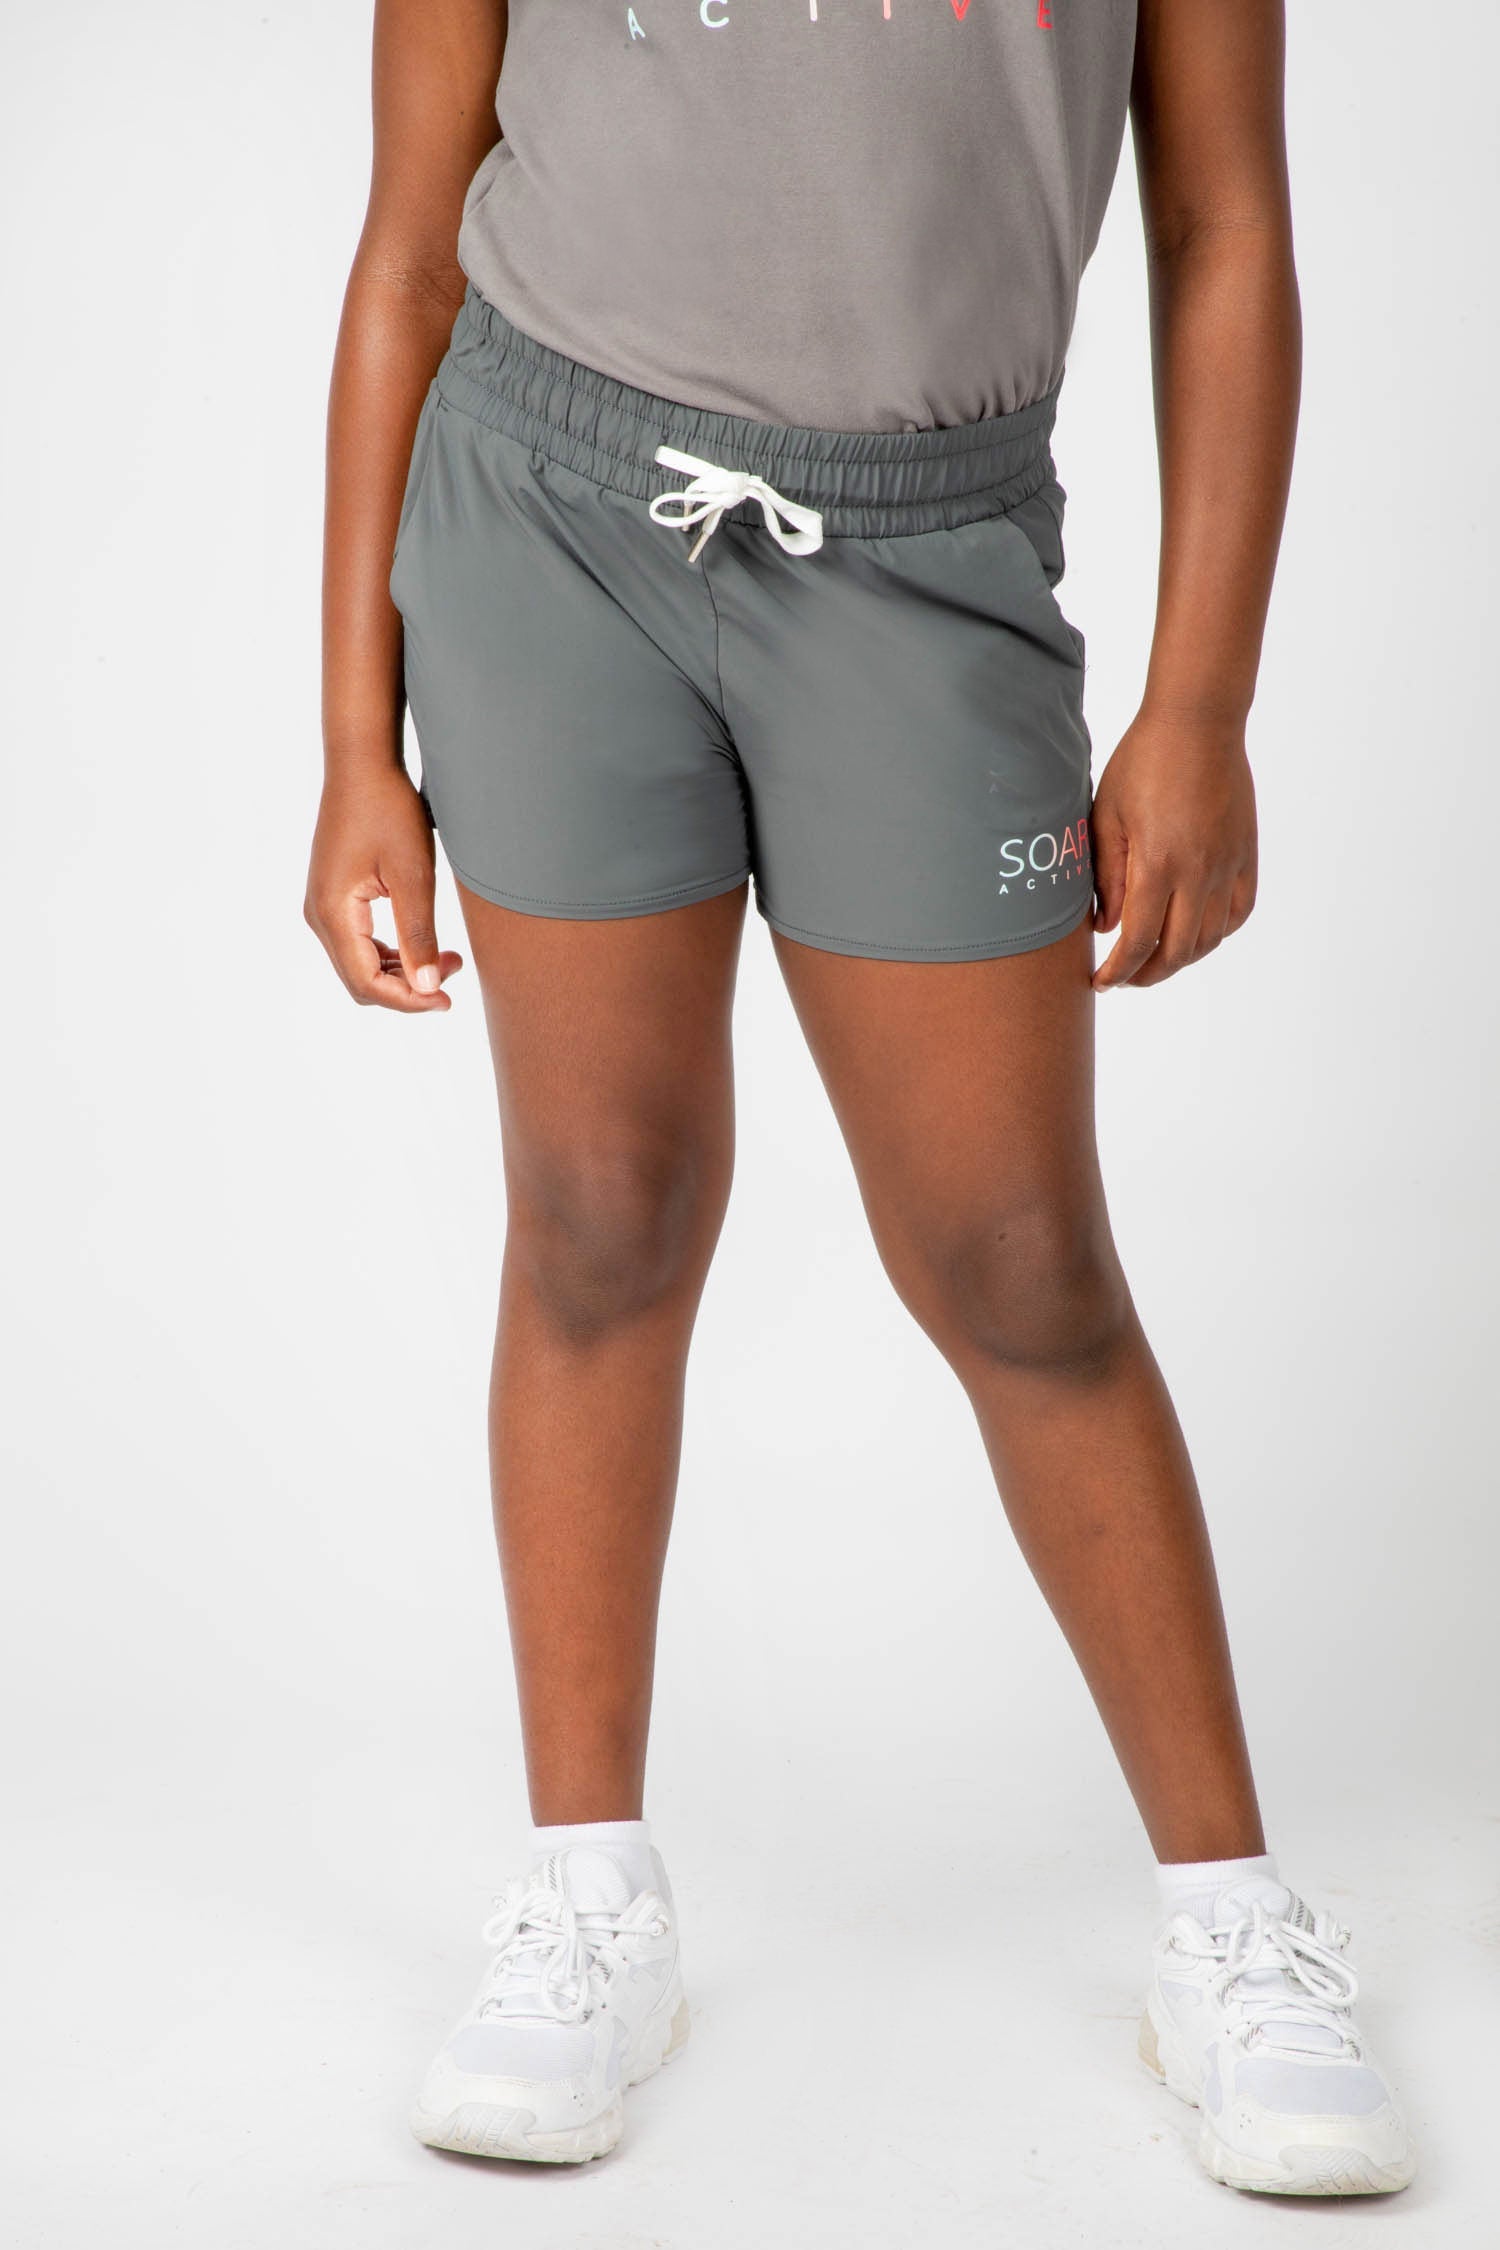 Soar Active Shorts XS / Charcoal Rise Run Short